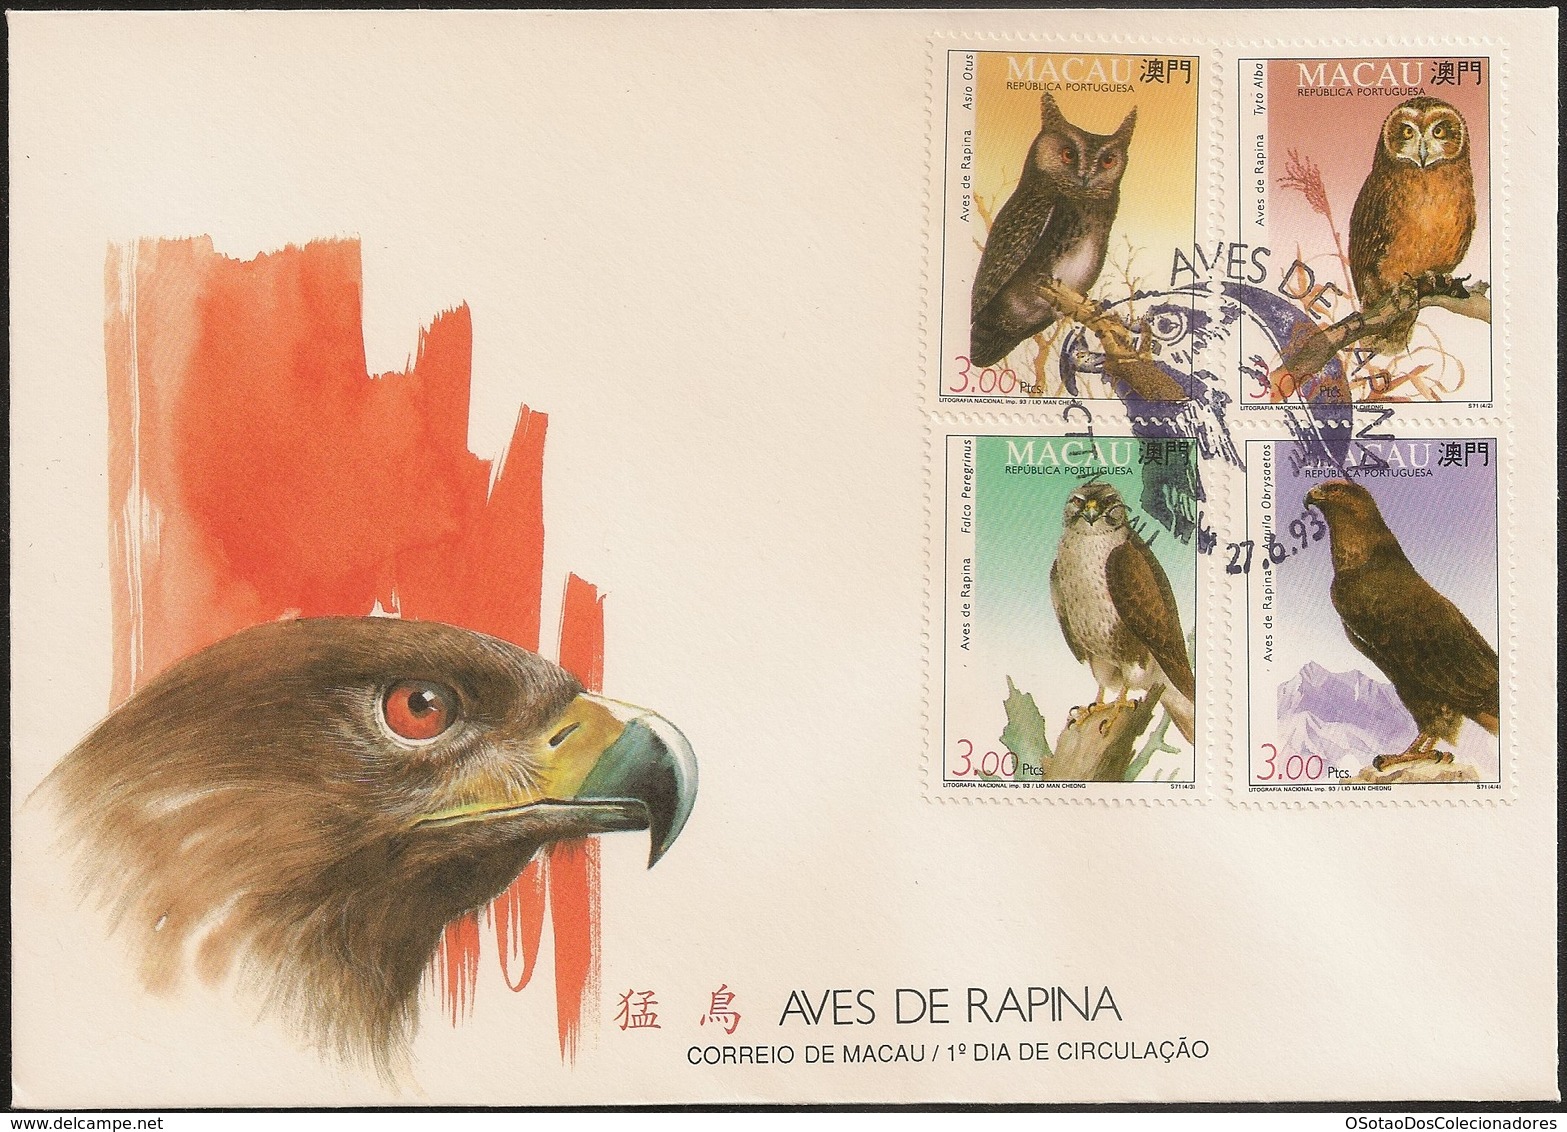 Macau Macao Chine FDC 1993 - Aves De Rapina - Birds Of Prey - MNH/Neuf - FDC